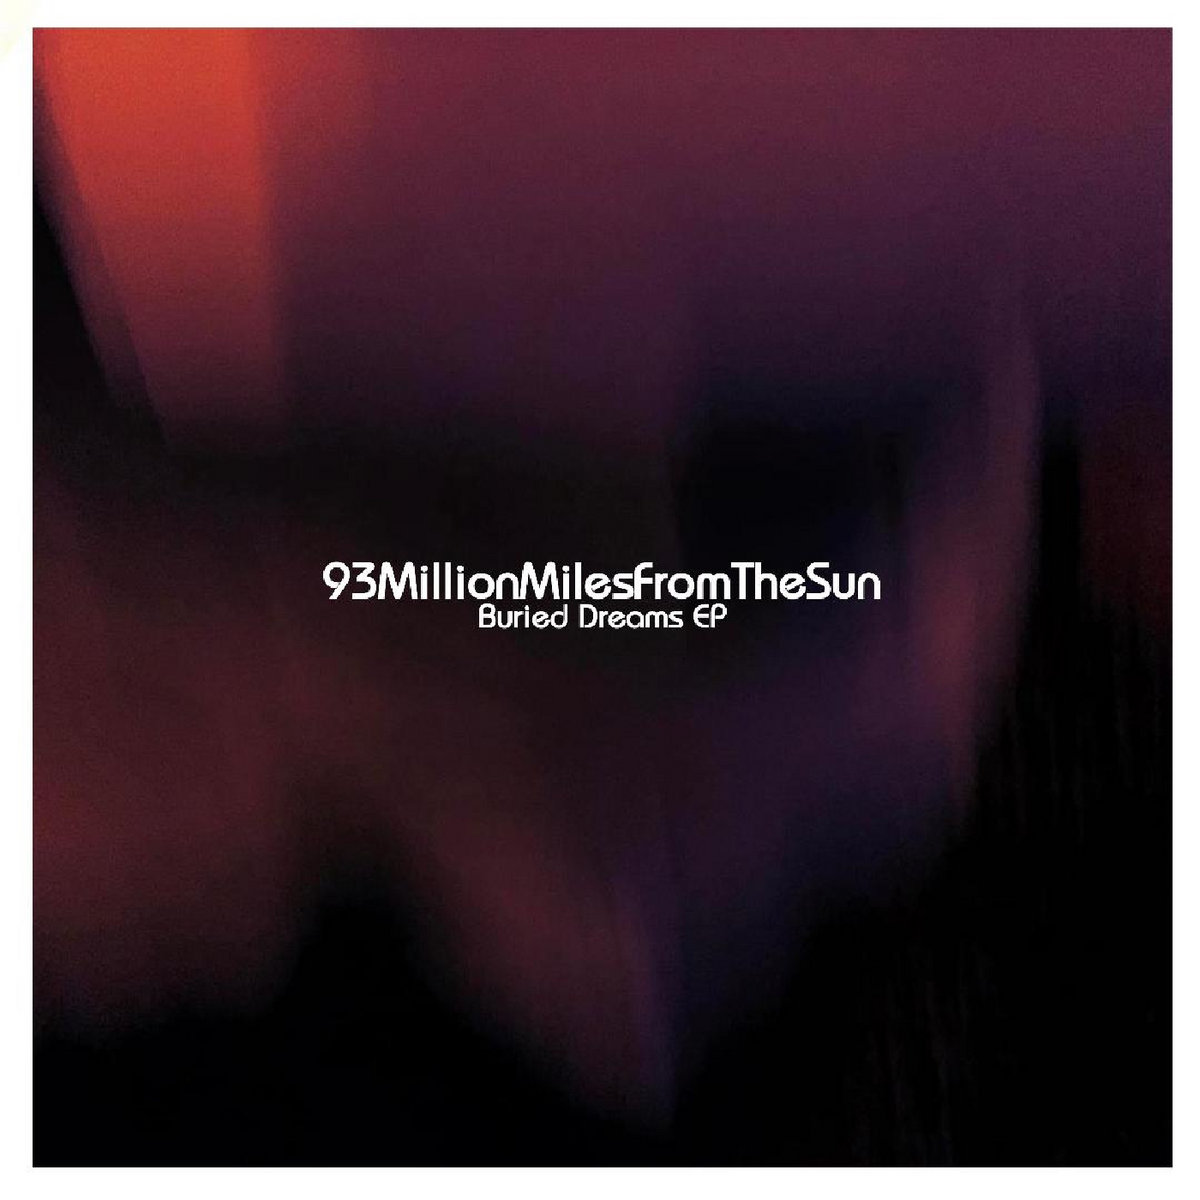 93MillionMilesFromTheSun - Buried Dreams EP